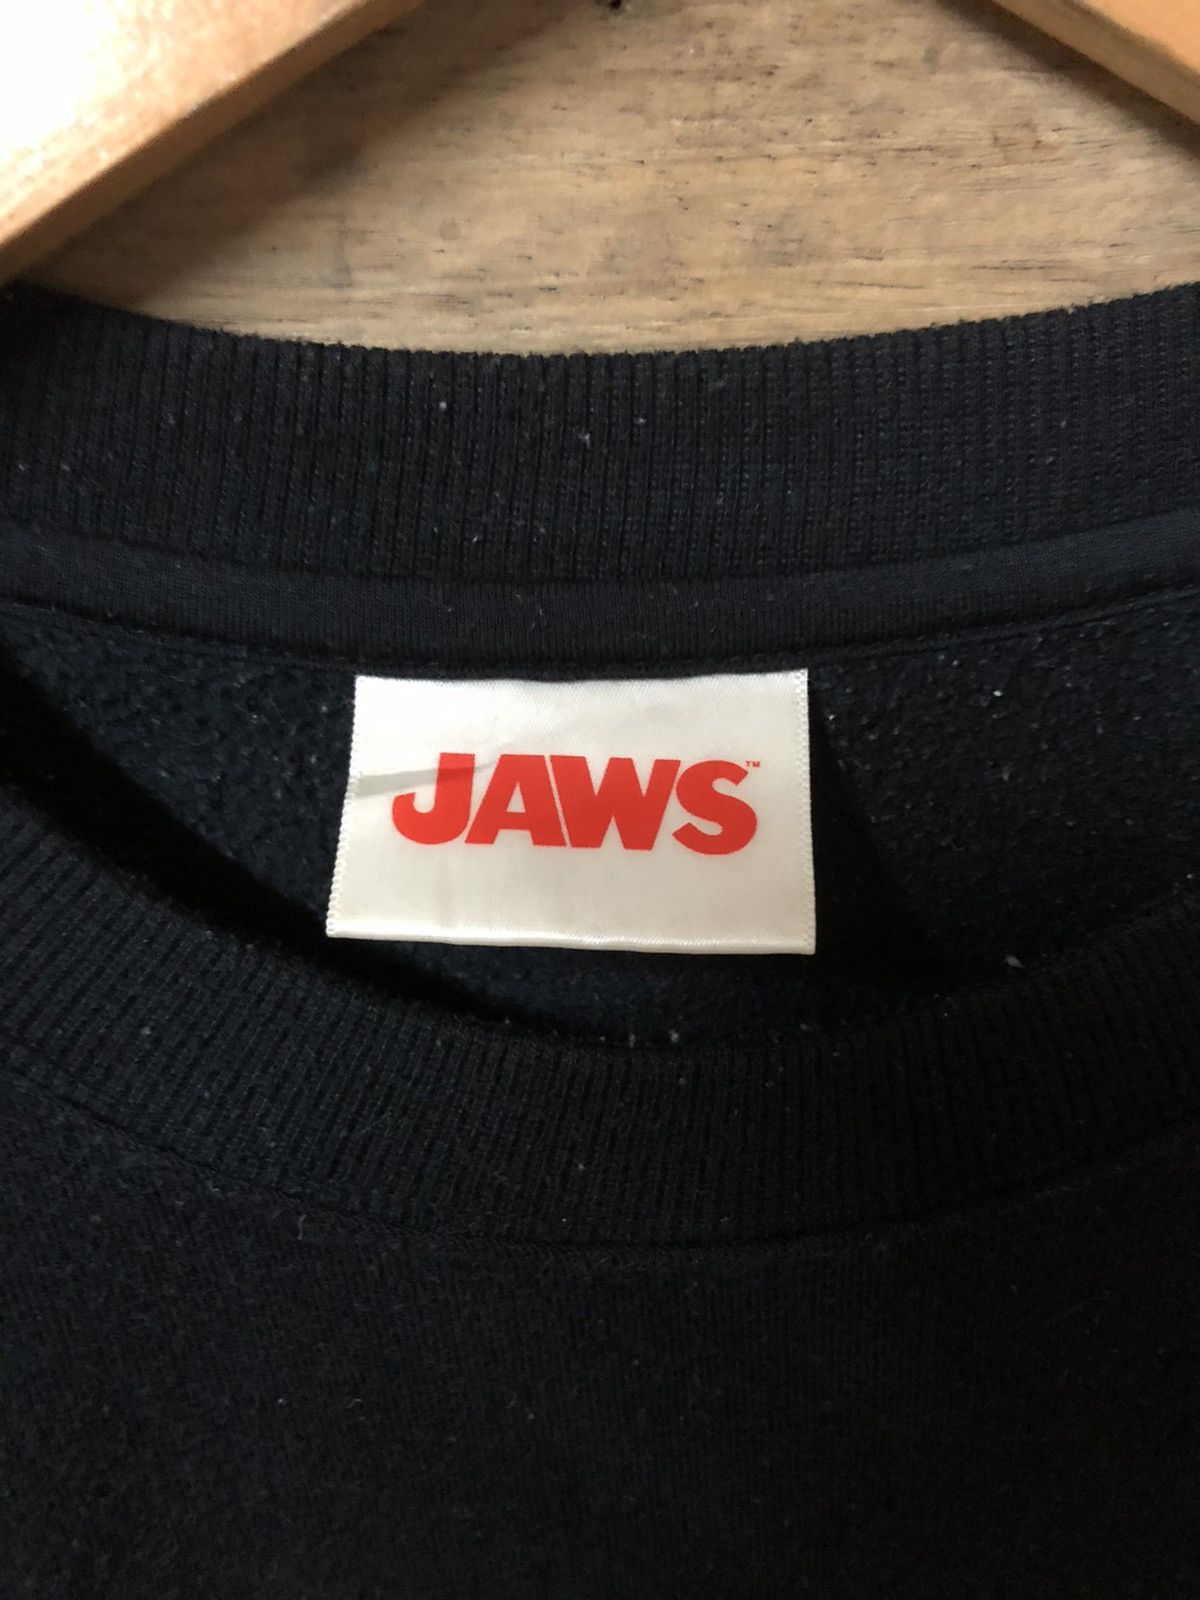 Jaws Movie By Universal Studios Crewneck - 6